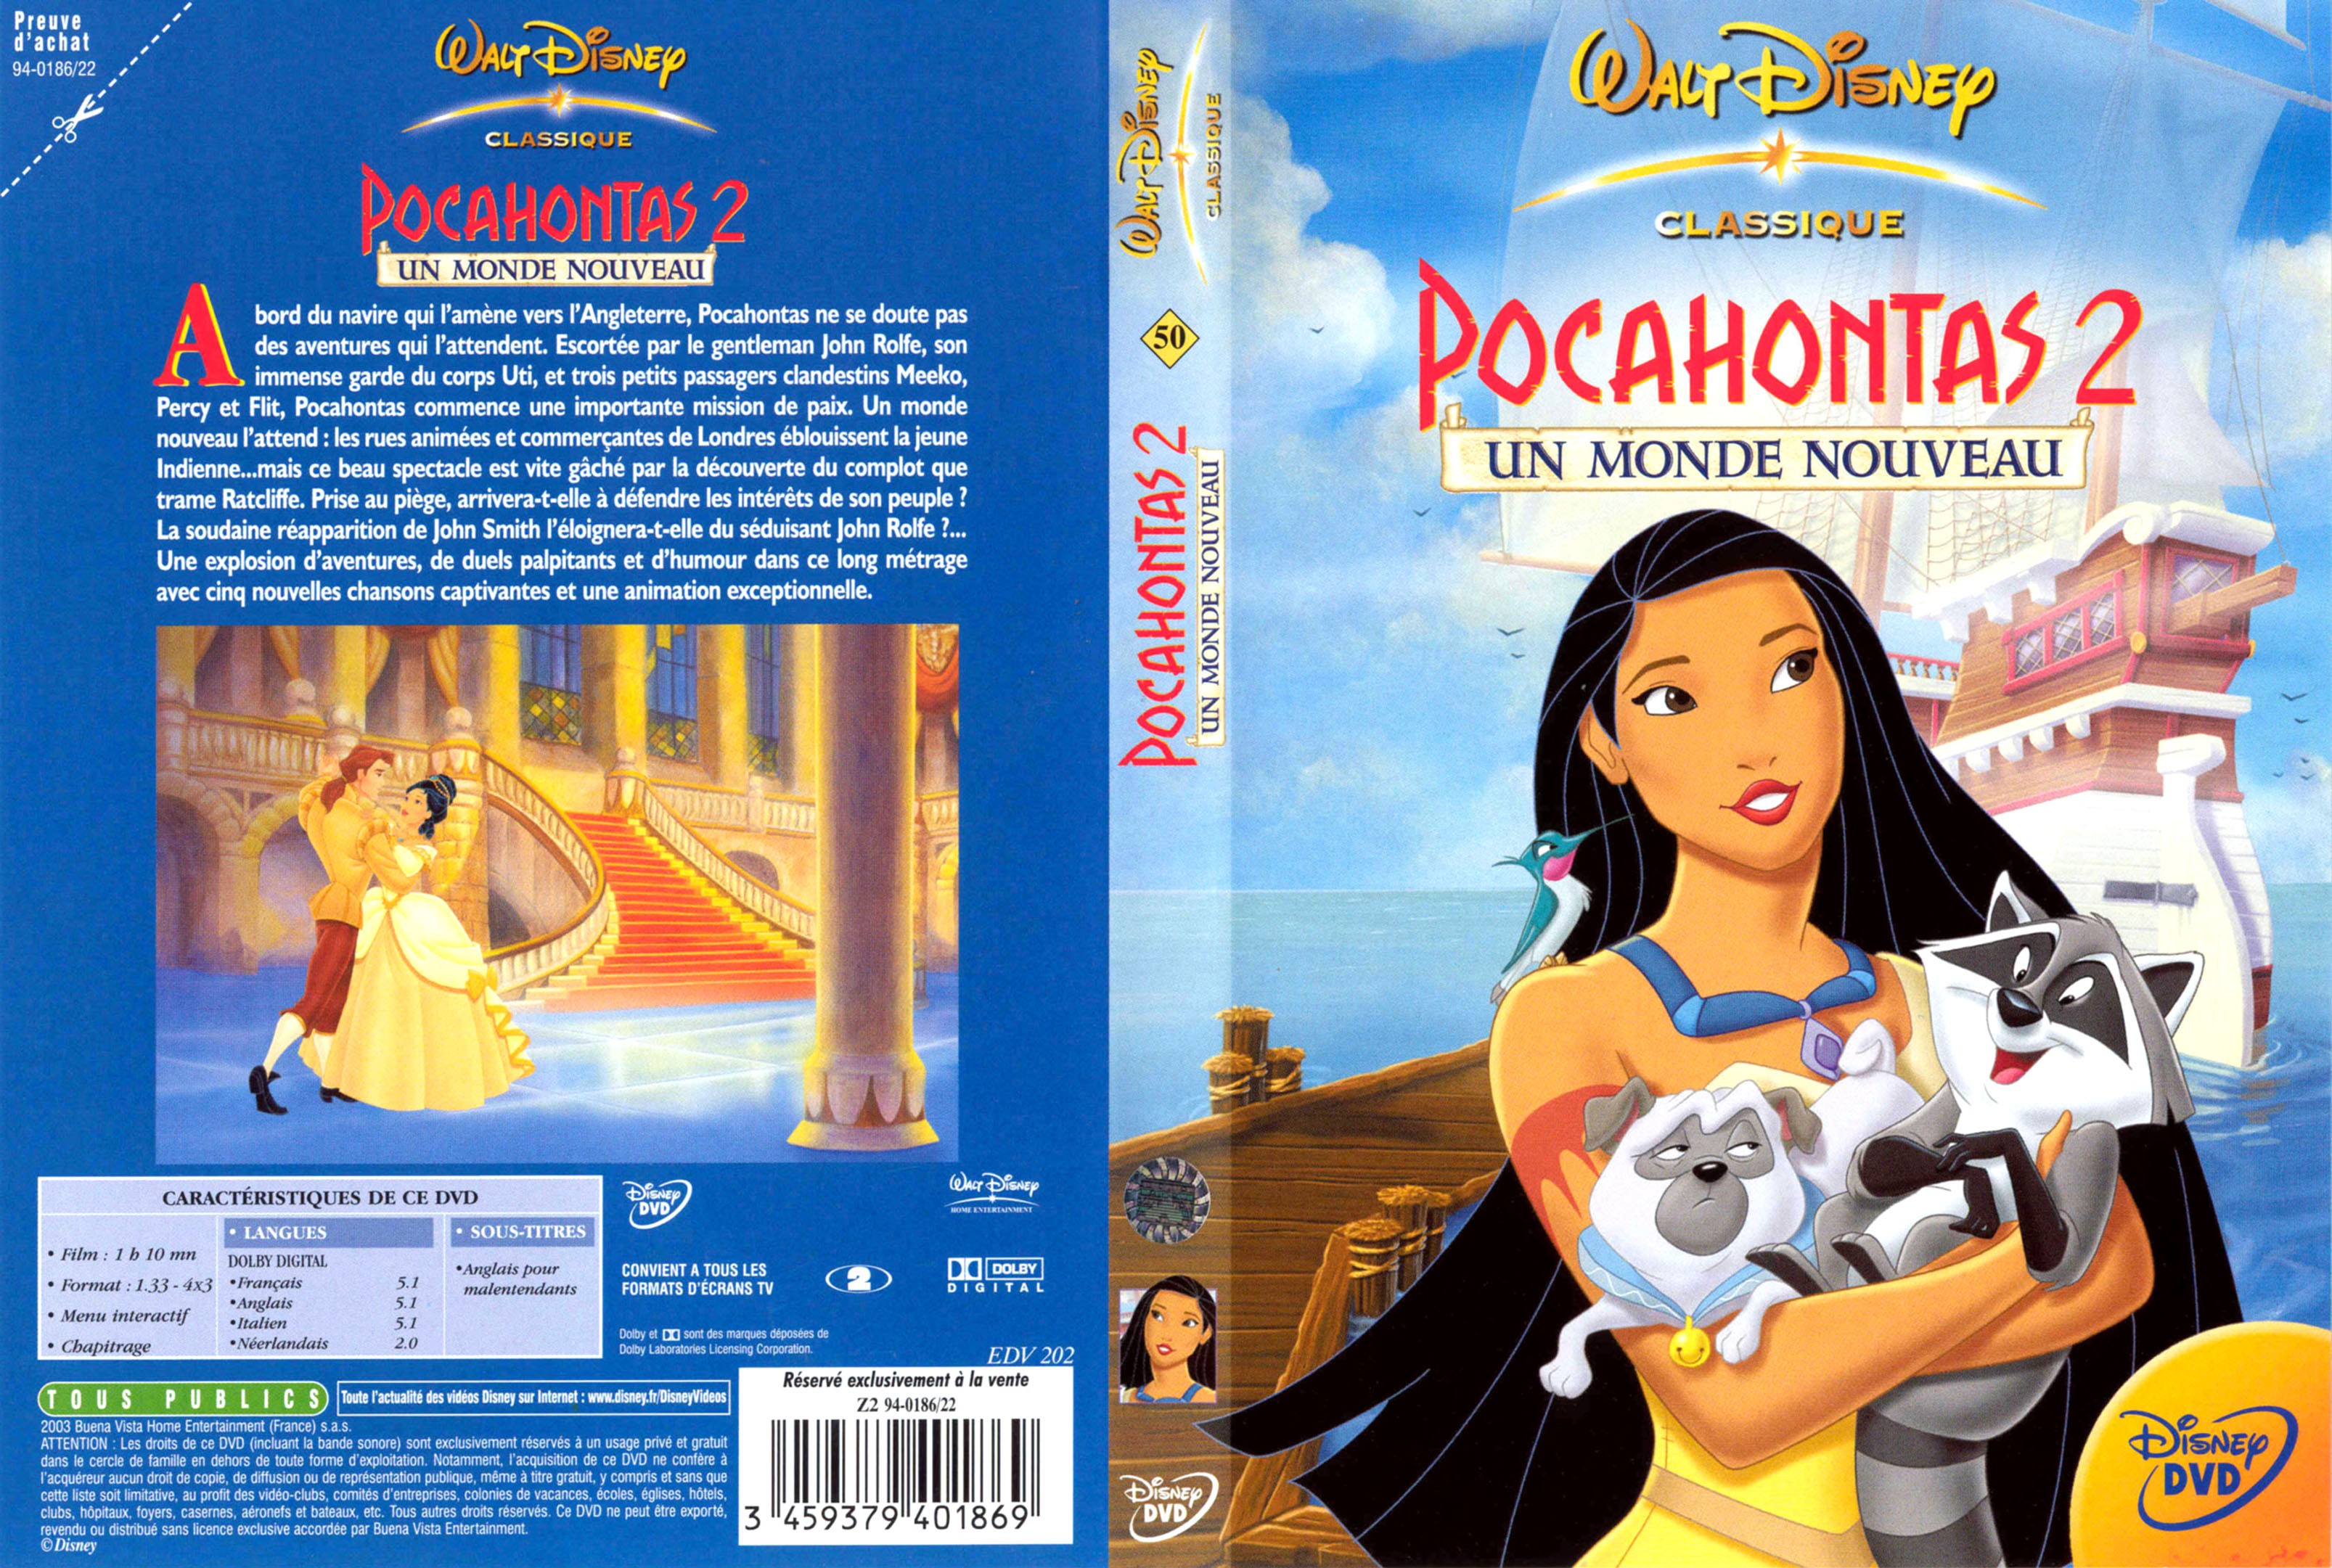 Jaquette DVD Pocahontas 2